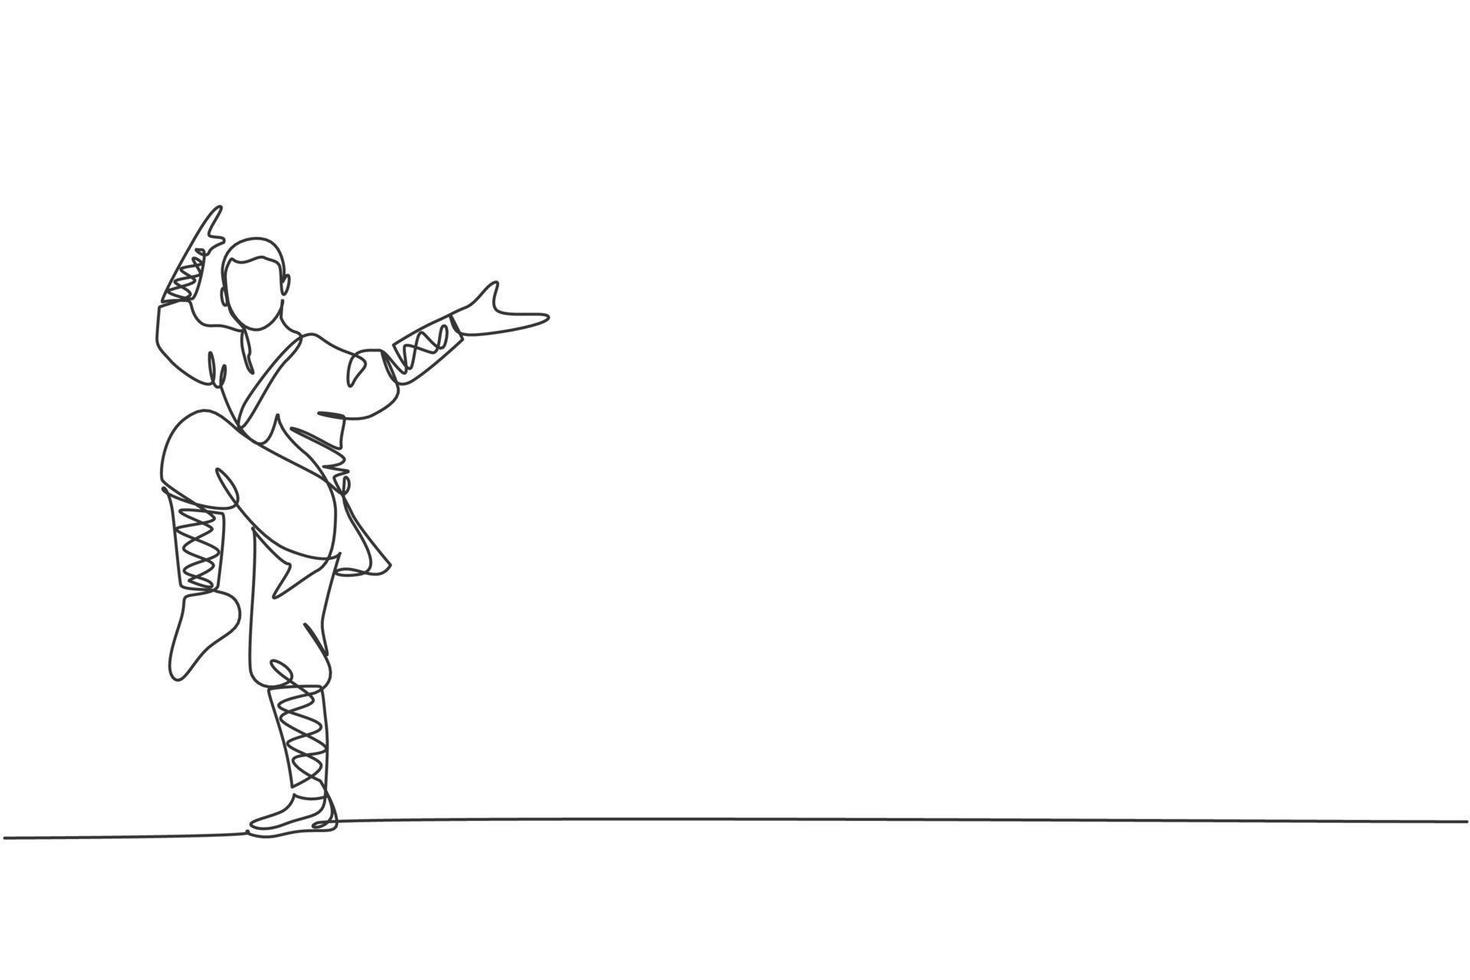 en enda linje ritning ung energisk shaolin munk man tränar kung fu slåss vid templet grafisk vektorillustration. antika kinesisk kampsport sport koncept. modern kontinuerlig linjeritningsdesign vektor